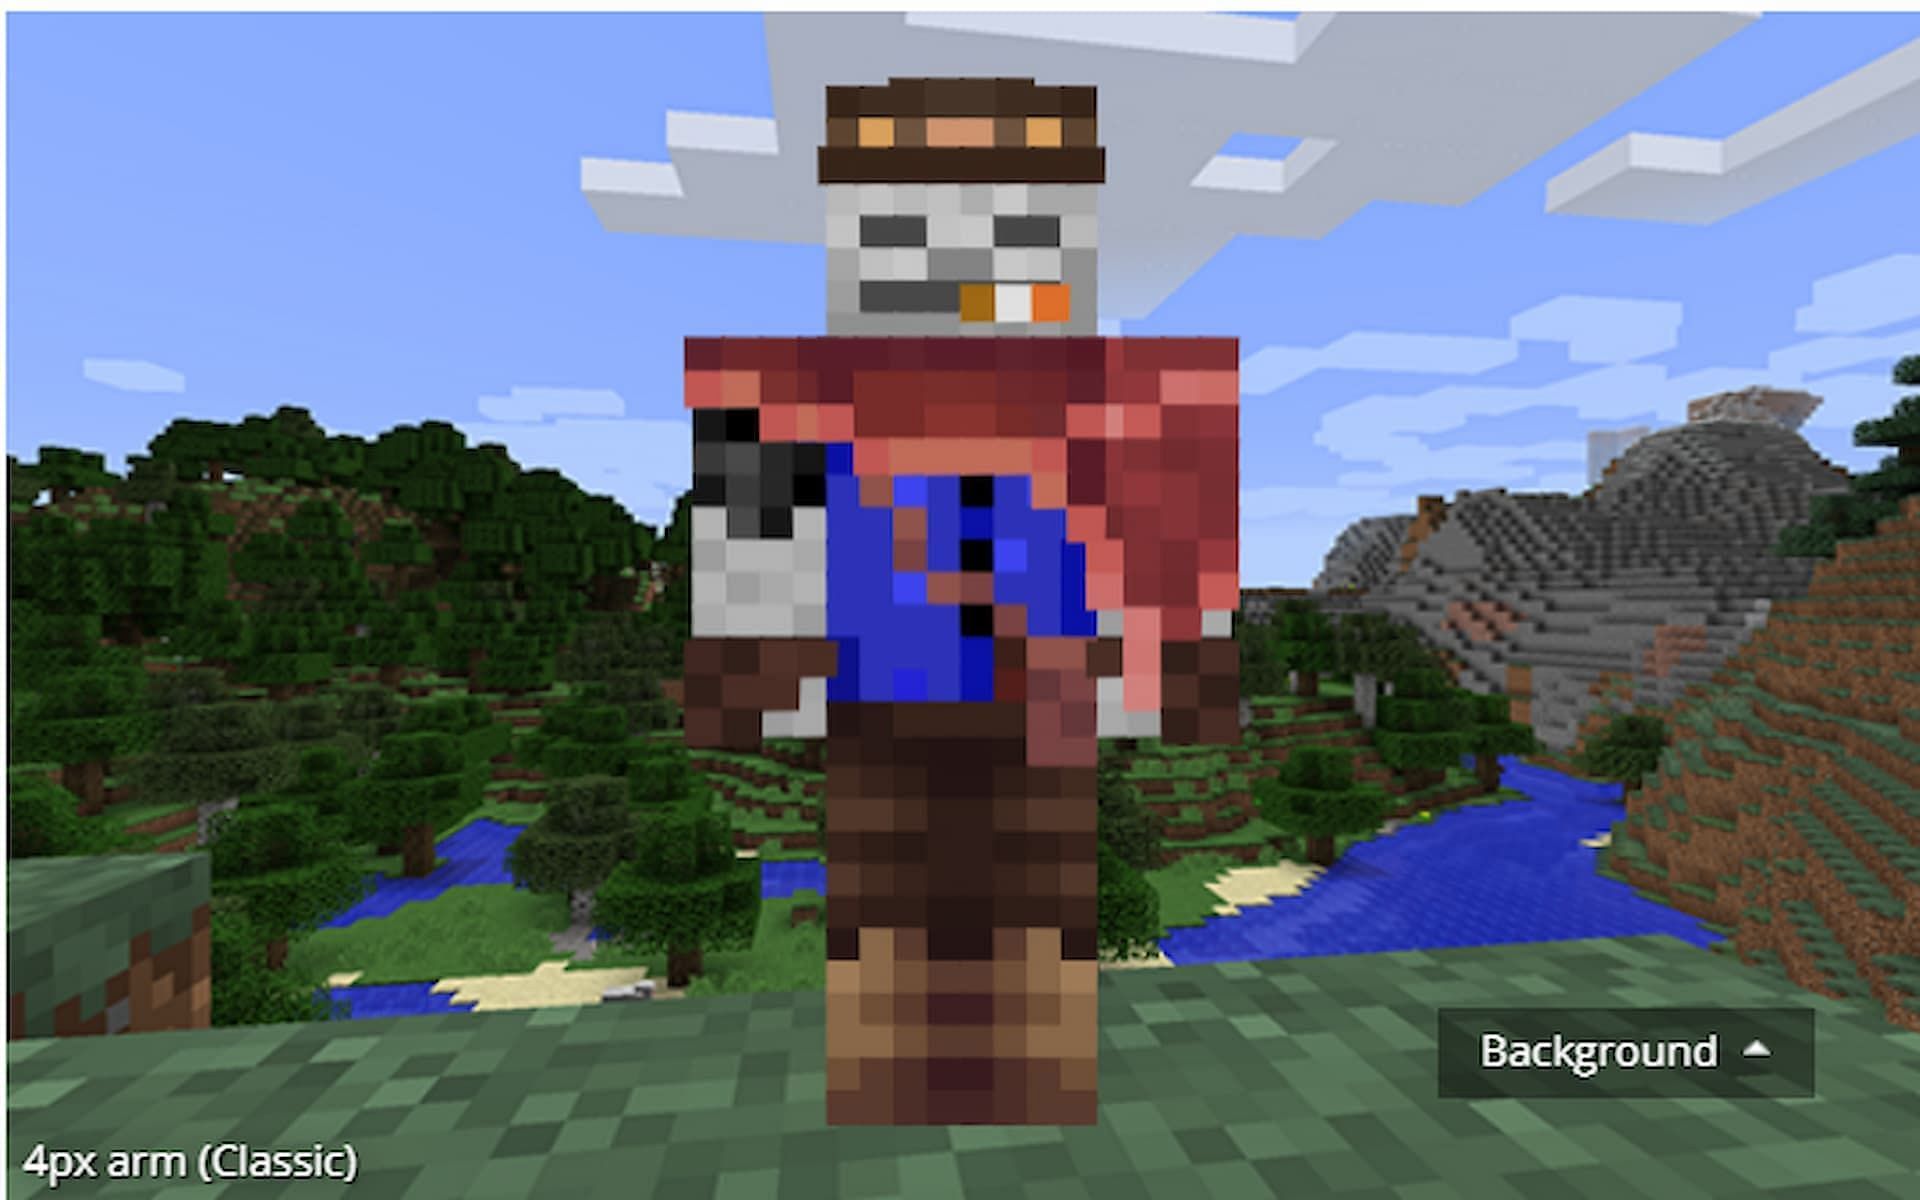 Saddle up with this Cowboy Skeleton skin (Image via Minecraftskins.com)